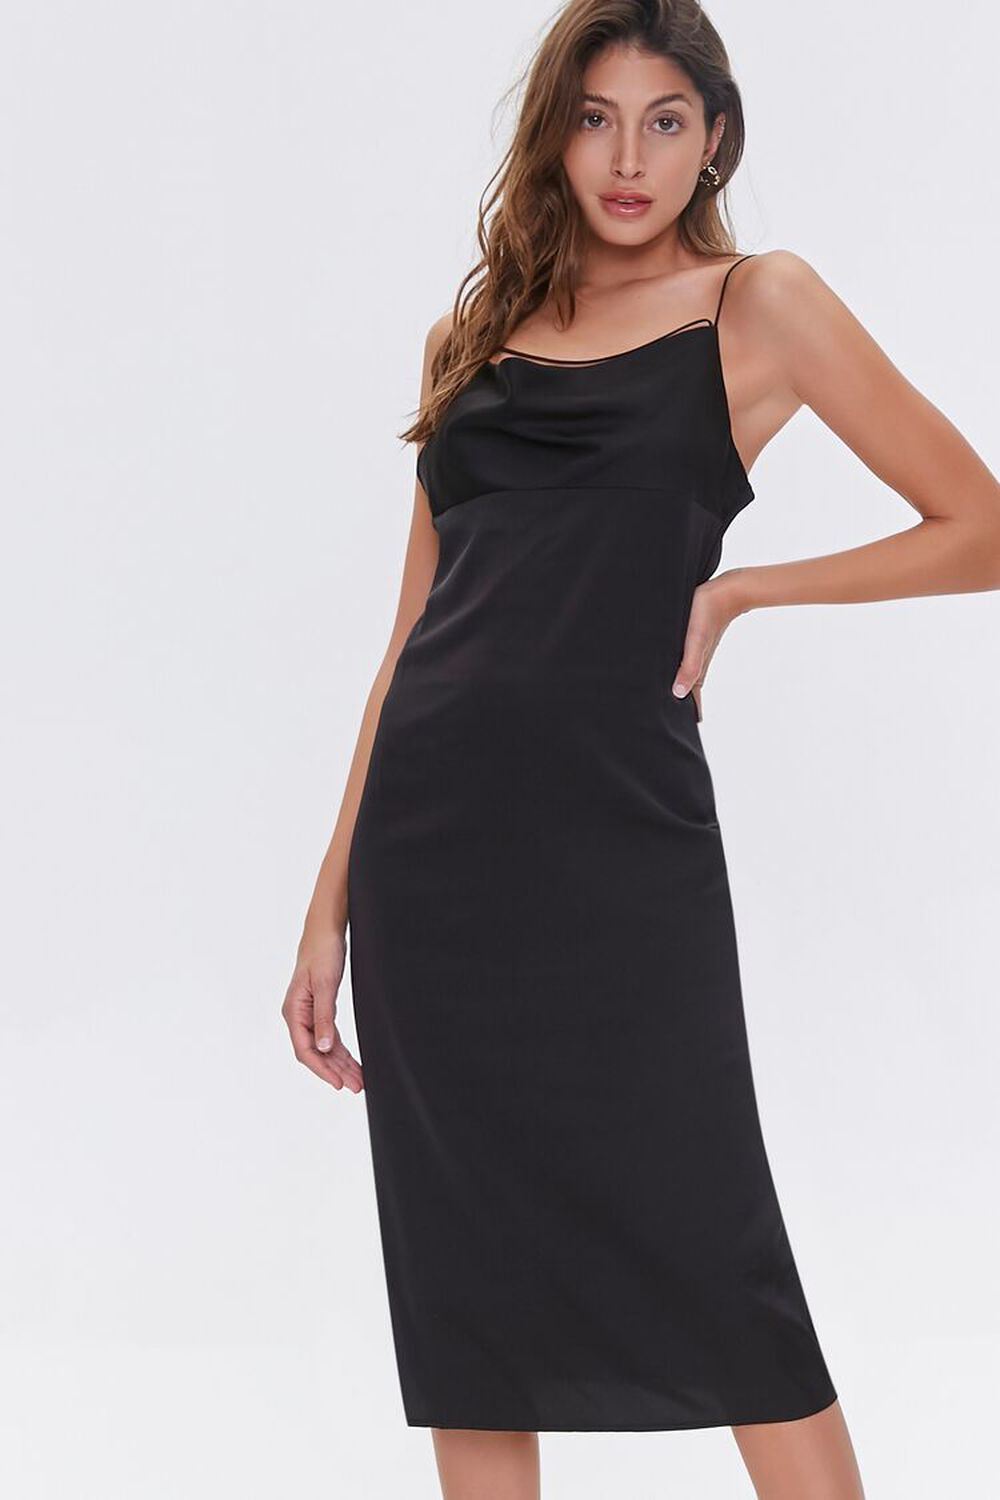 BLACK Satin Cowl-Neck Slip Dress, image 2